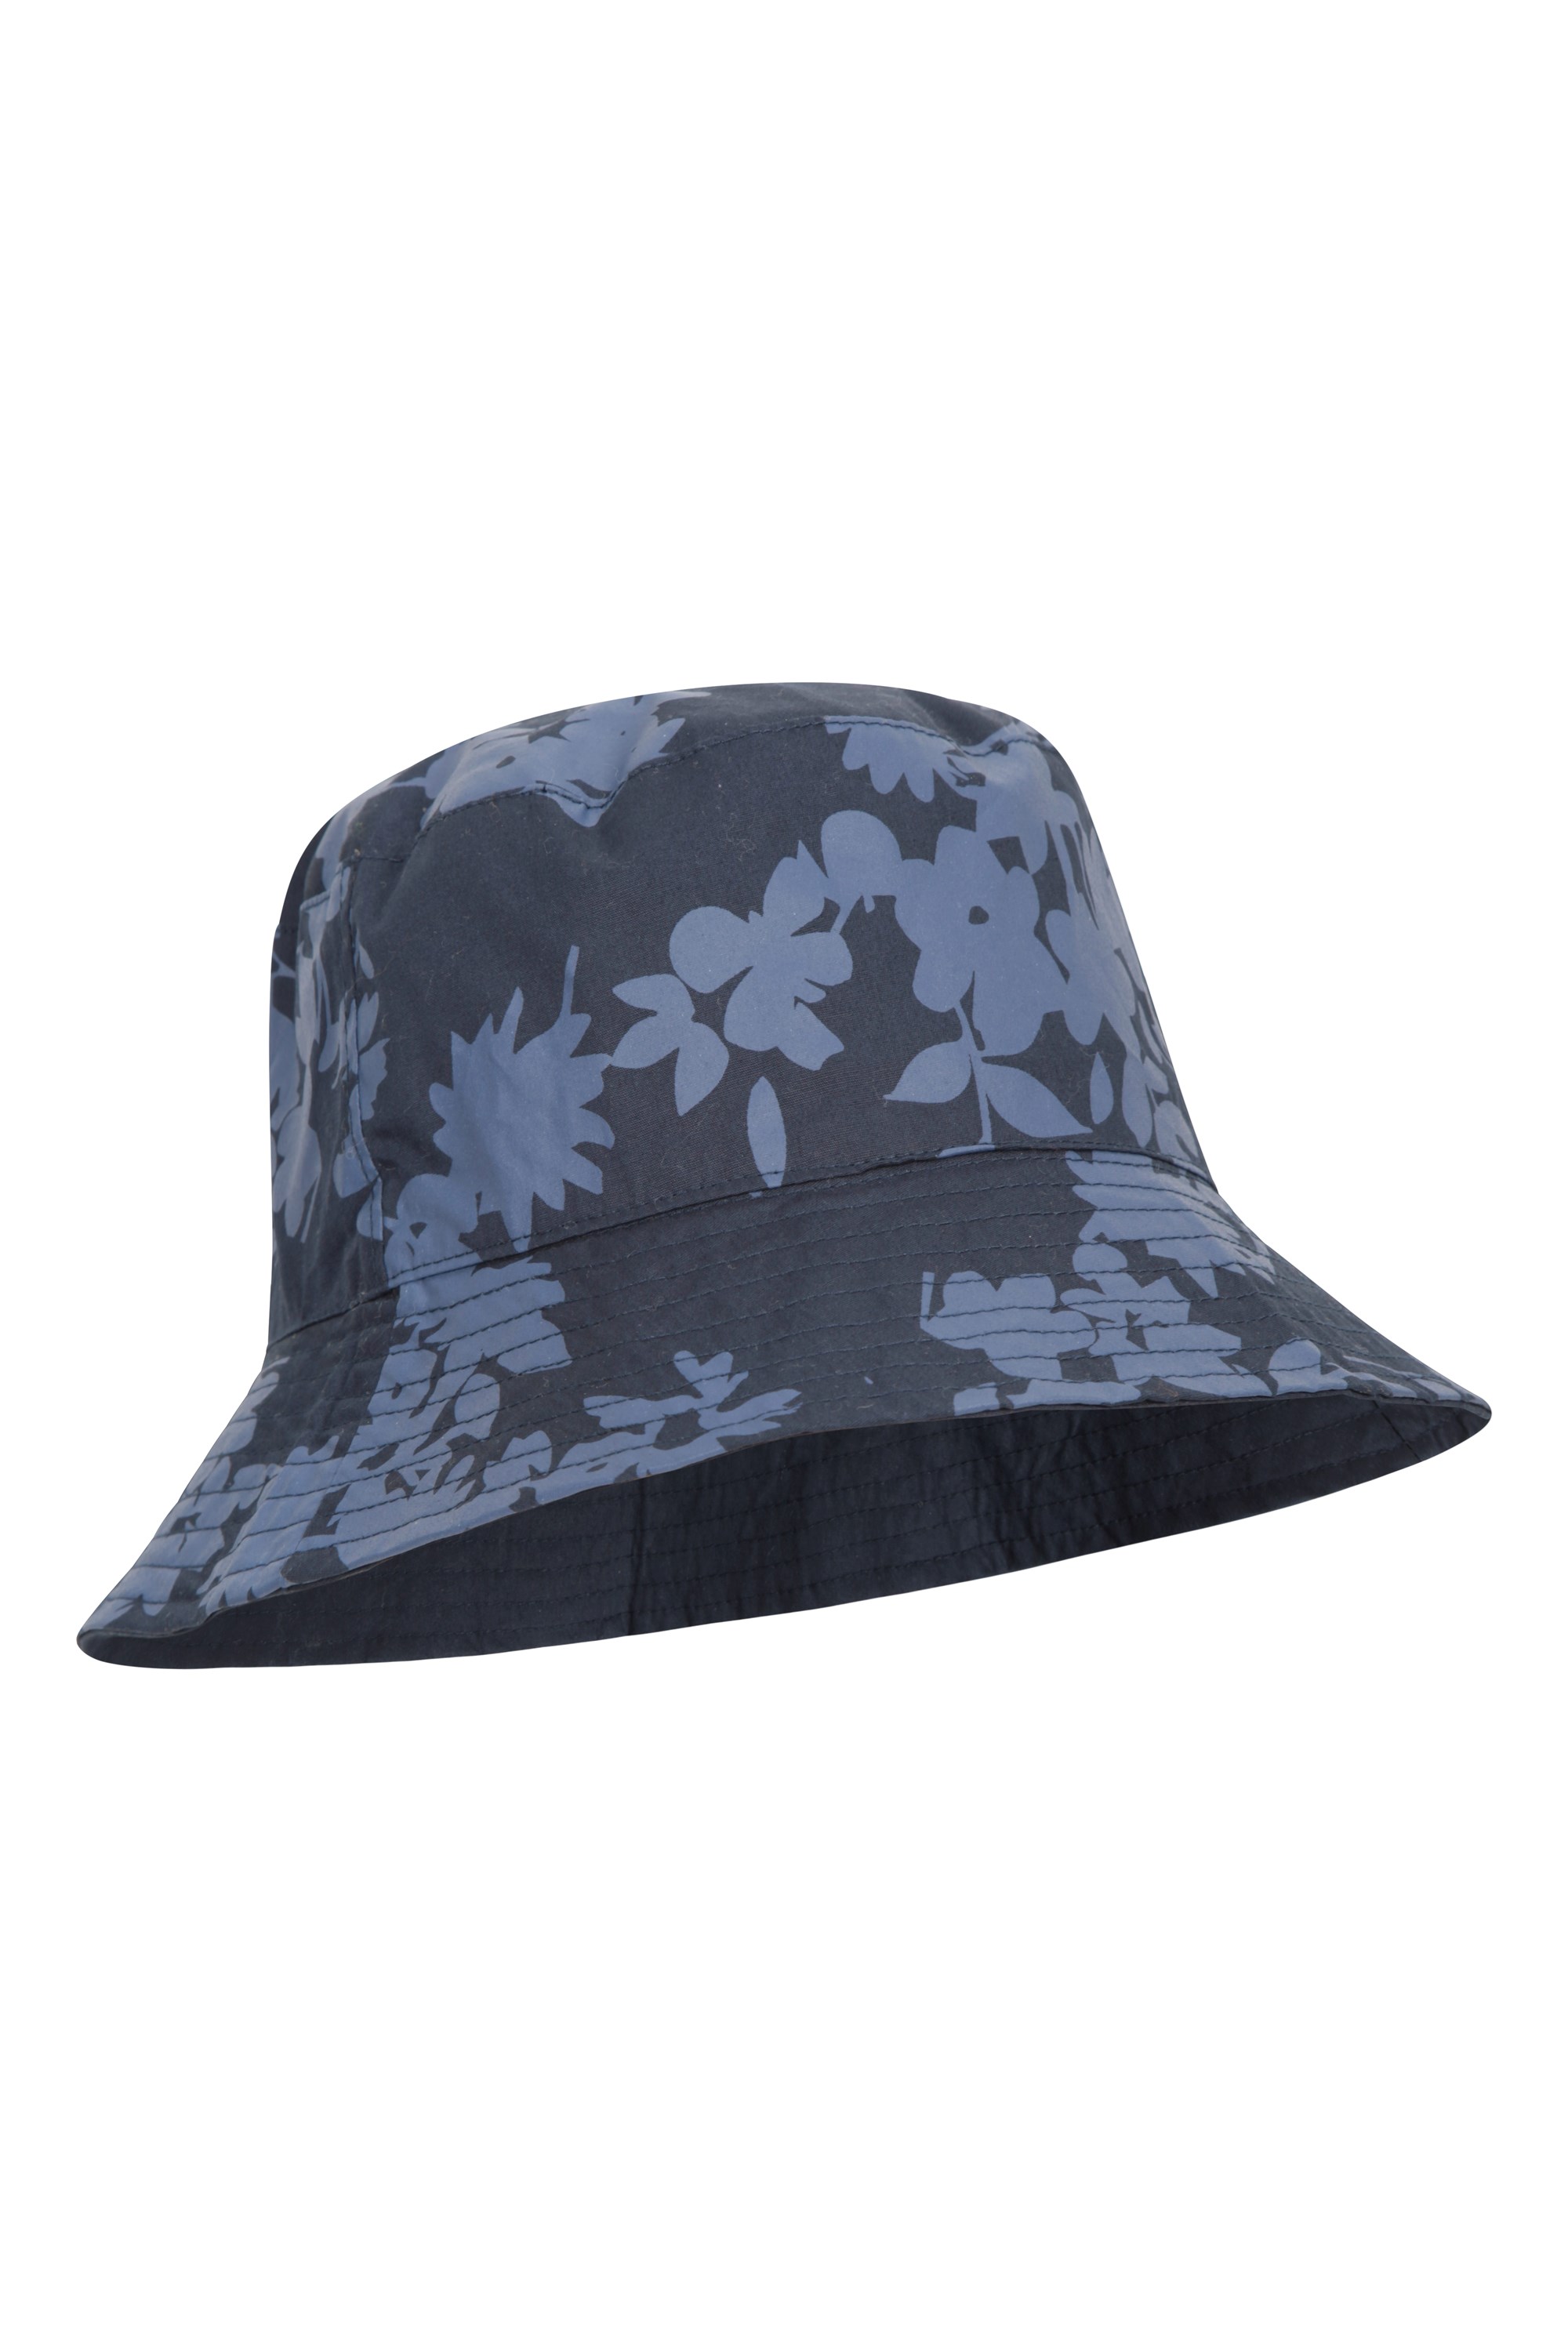 Mountain Warehouse Mountain Warehouse Coast Women's Reversible Bucket Hat Ladies Cotton Headwear 